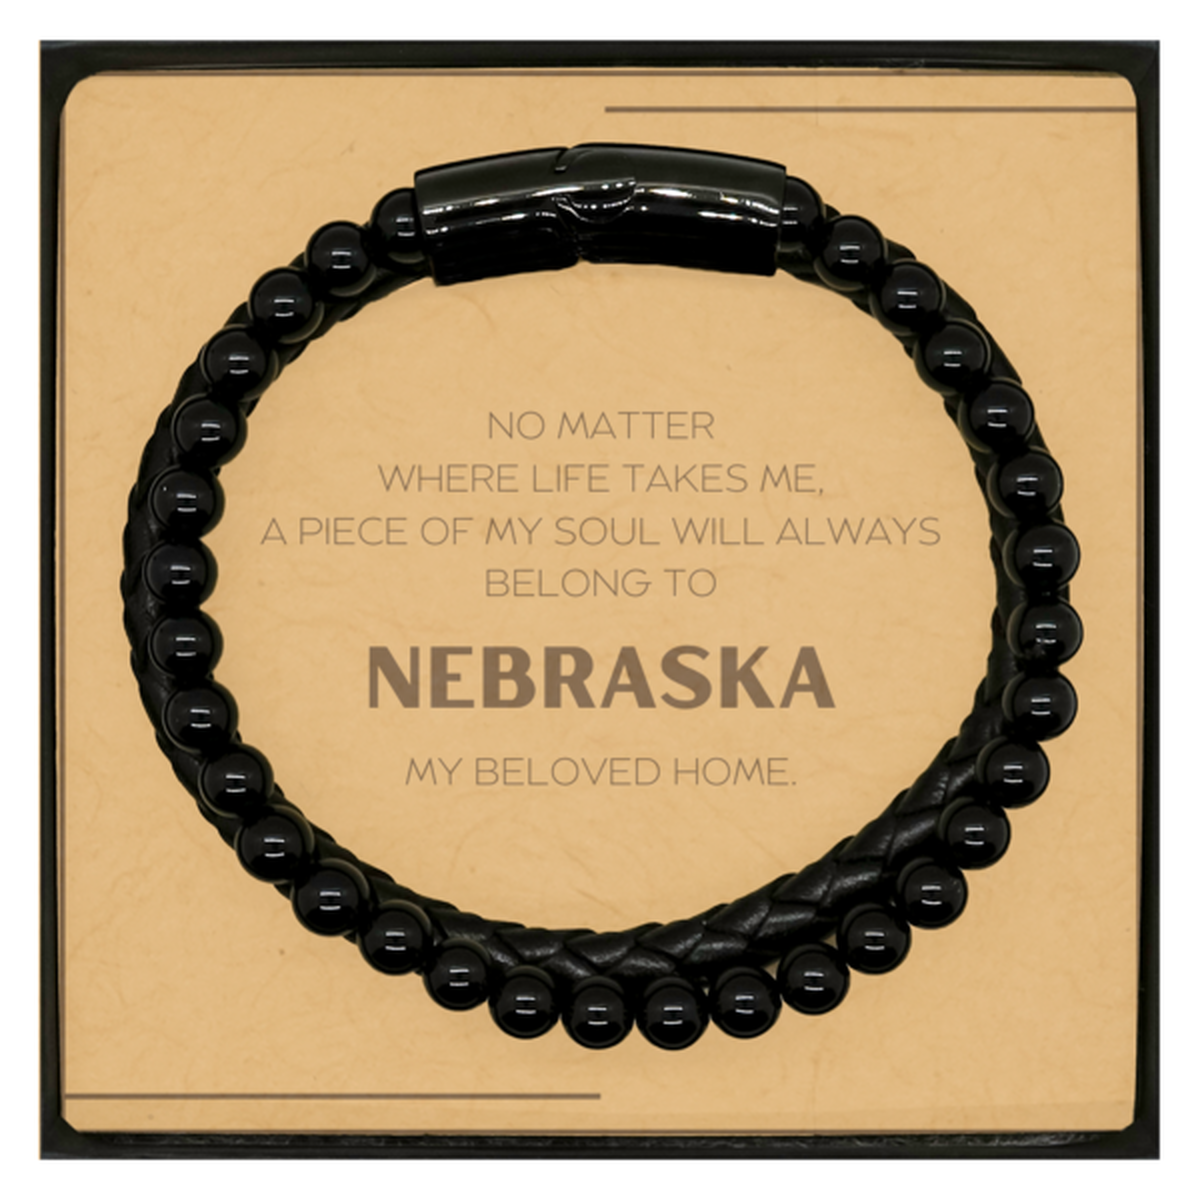 Love Nebraska State Gifts, My soul will always belong to Nebraska, Proud Stone Leather Bracelets, Birthday Christmas Unique Gifts For Nebraska Men, Women, Friends